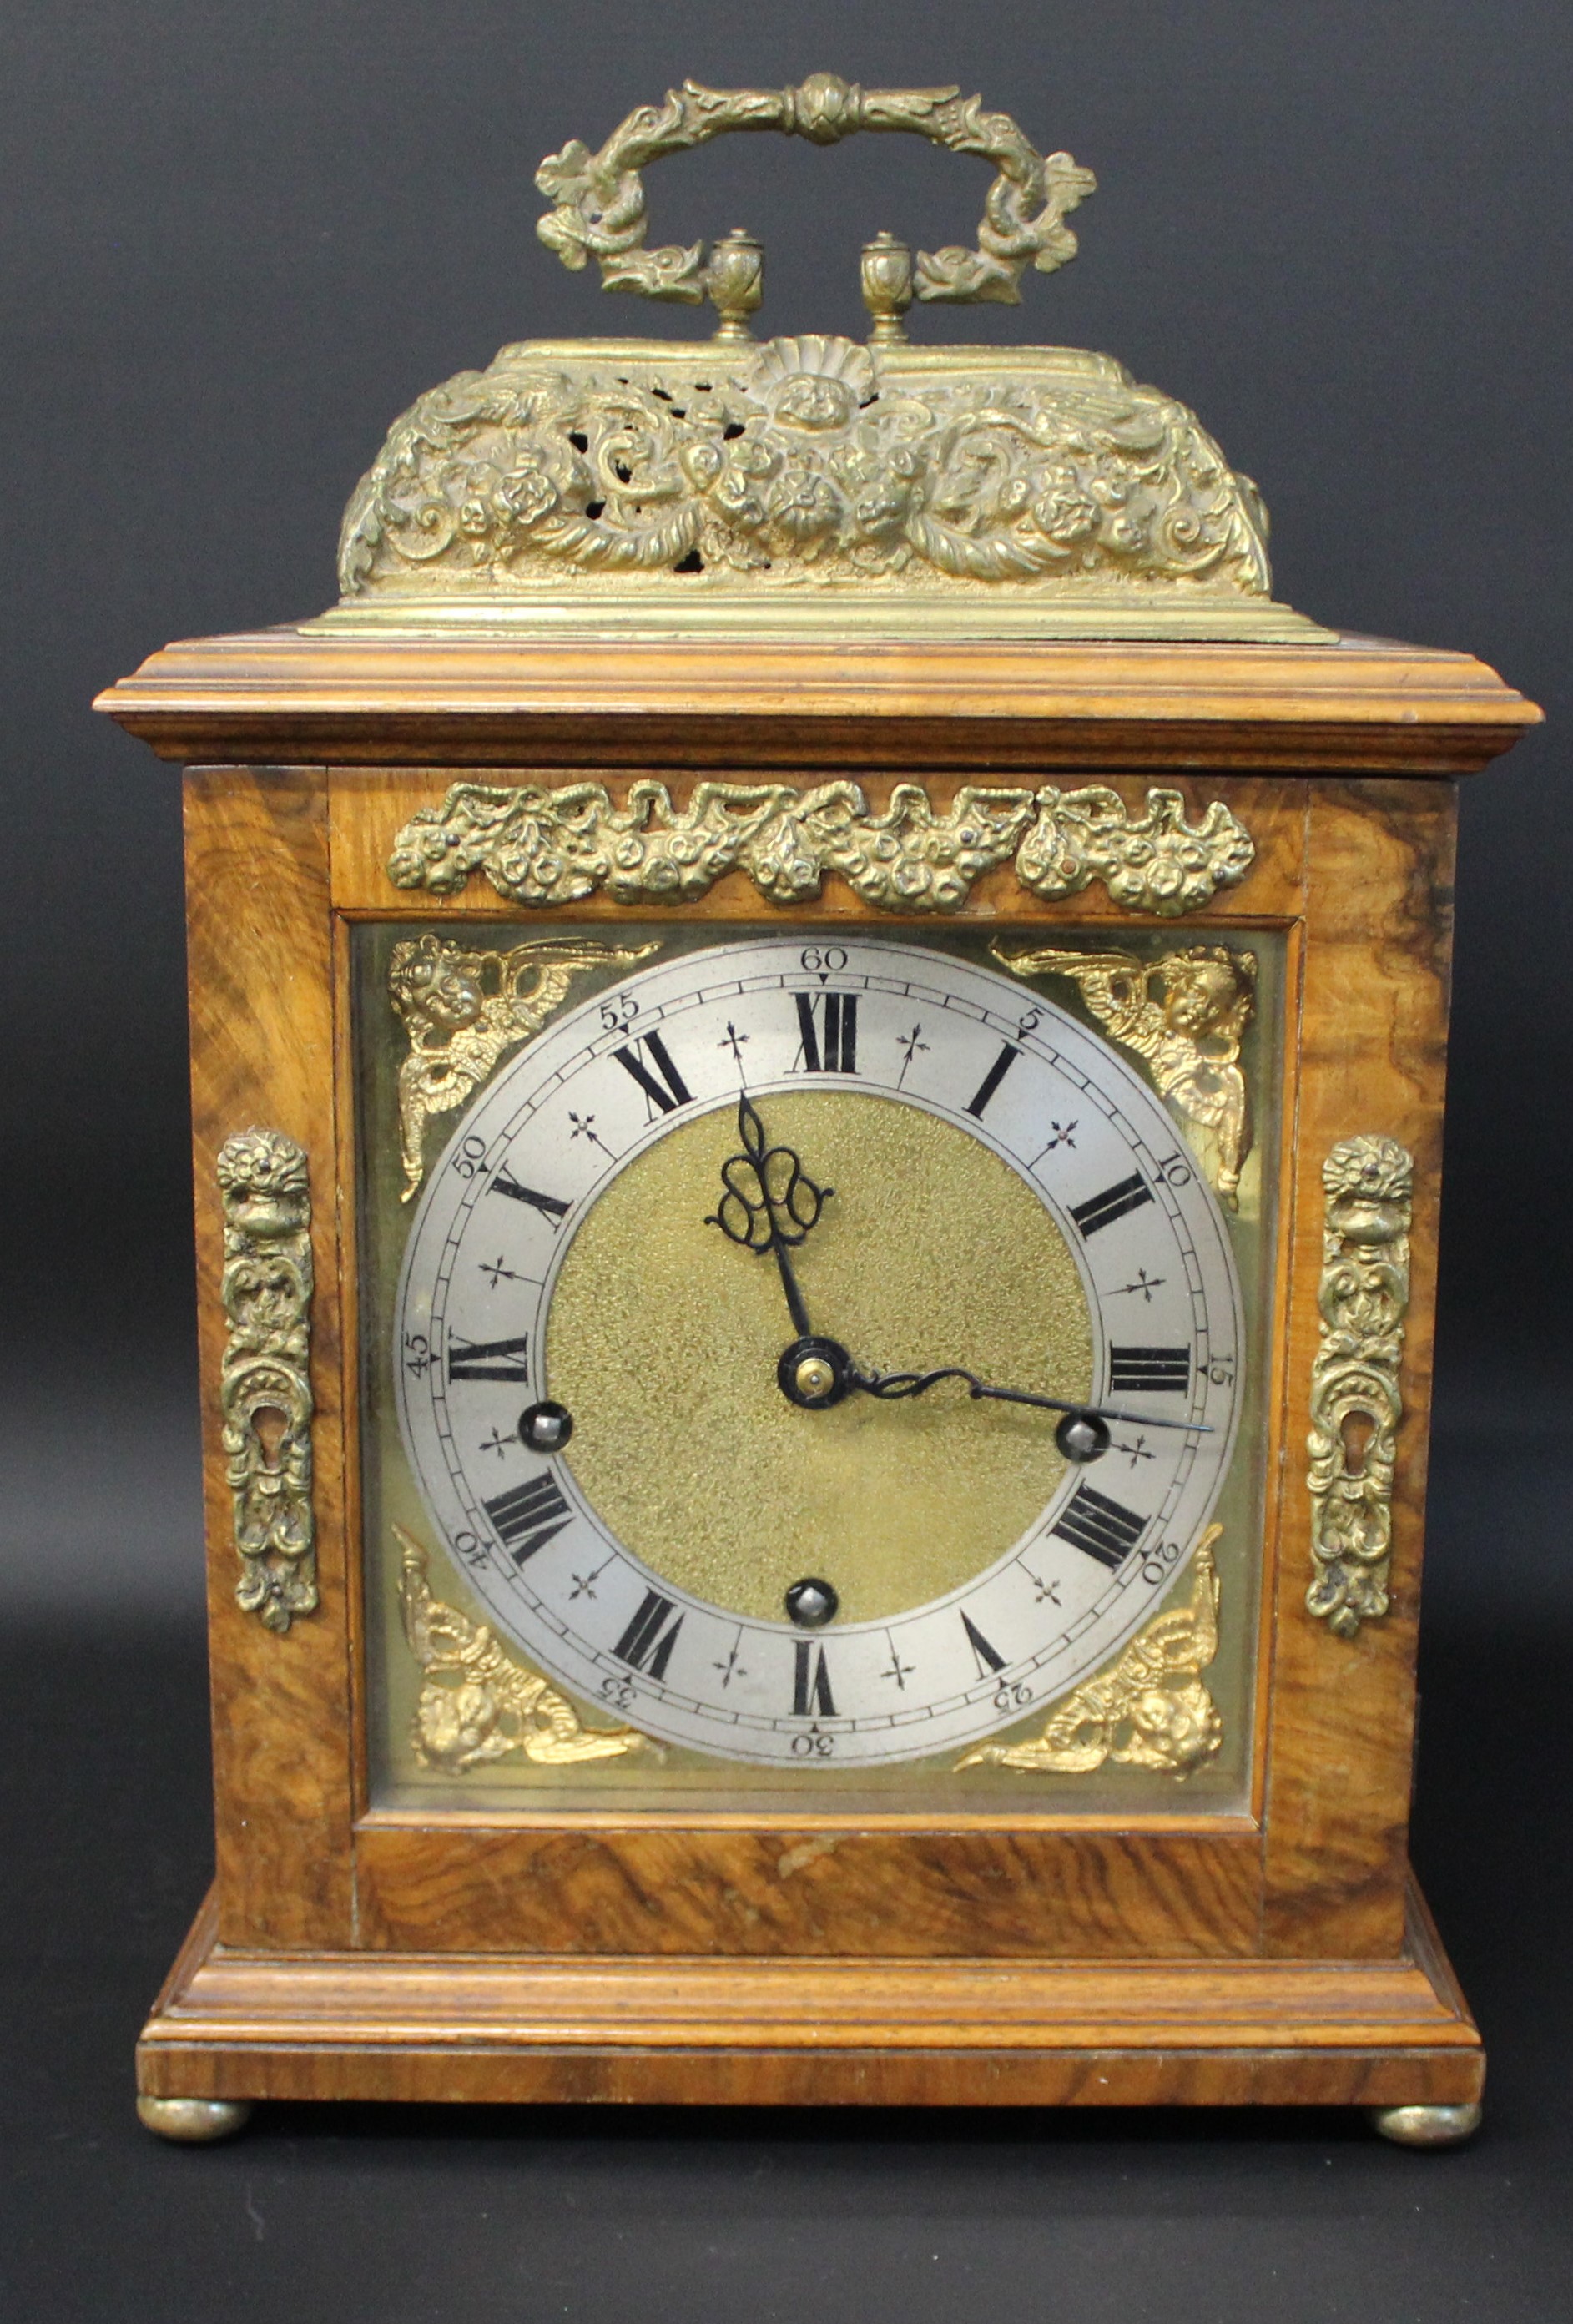 20th century Goldsmiths & Silversmiths Co Ltd ,112 Regent Street, London W1 reproduction table clock